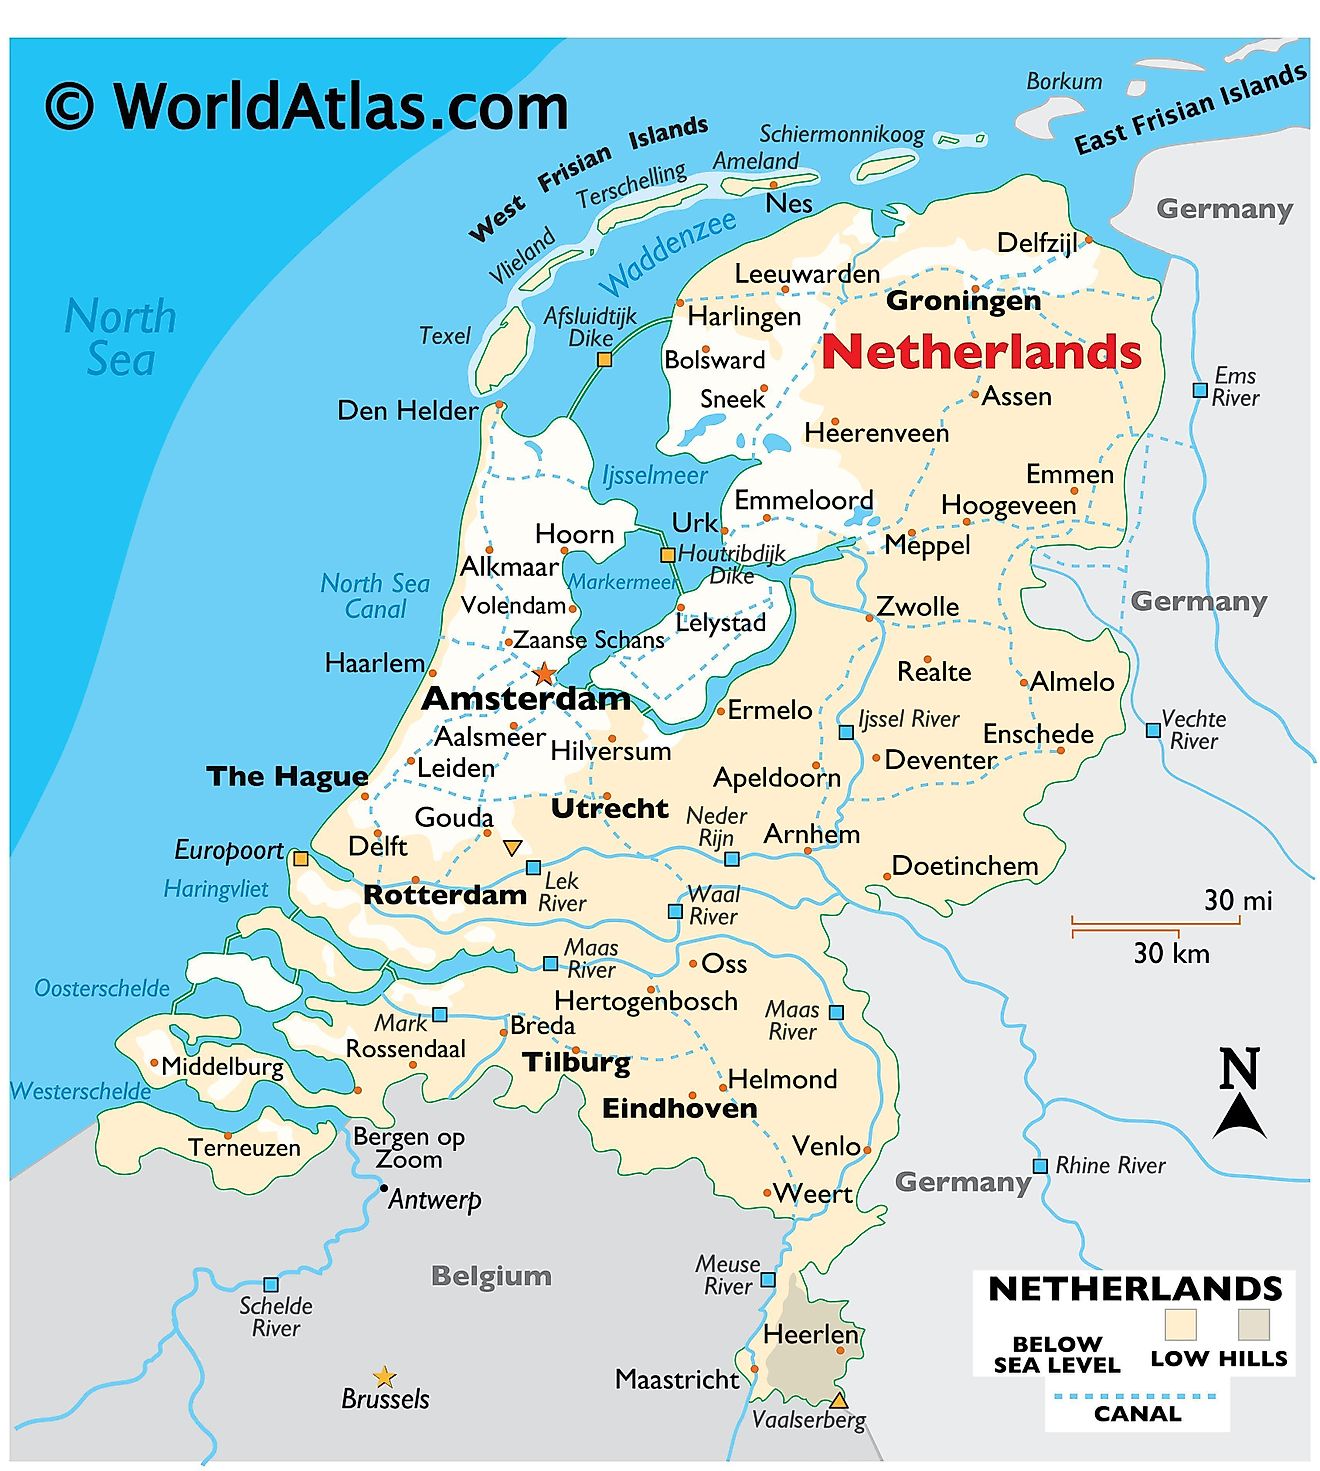 Darmen Plaatsen zonde The Netherlands Maps & Facts - World Atlas